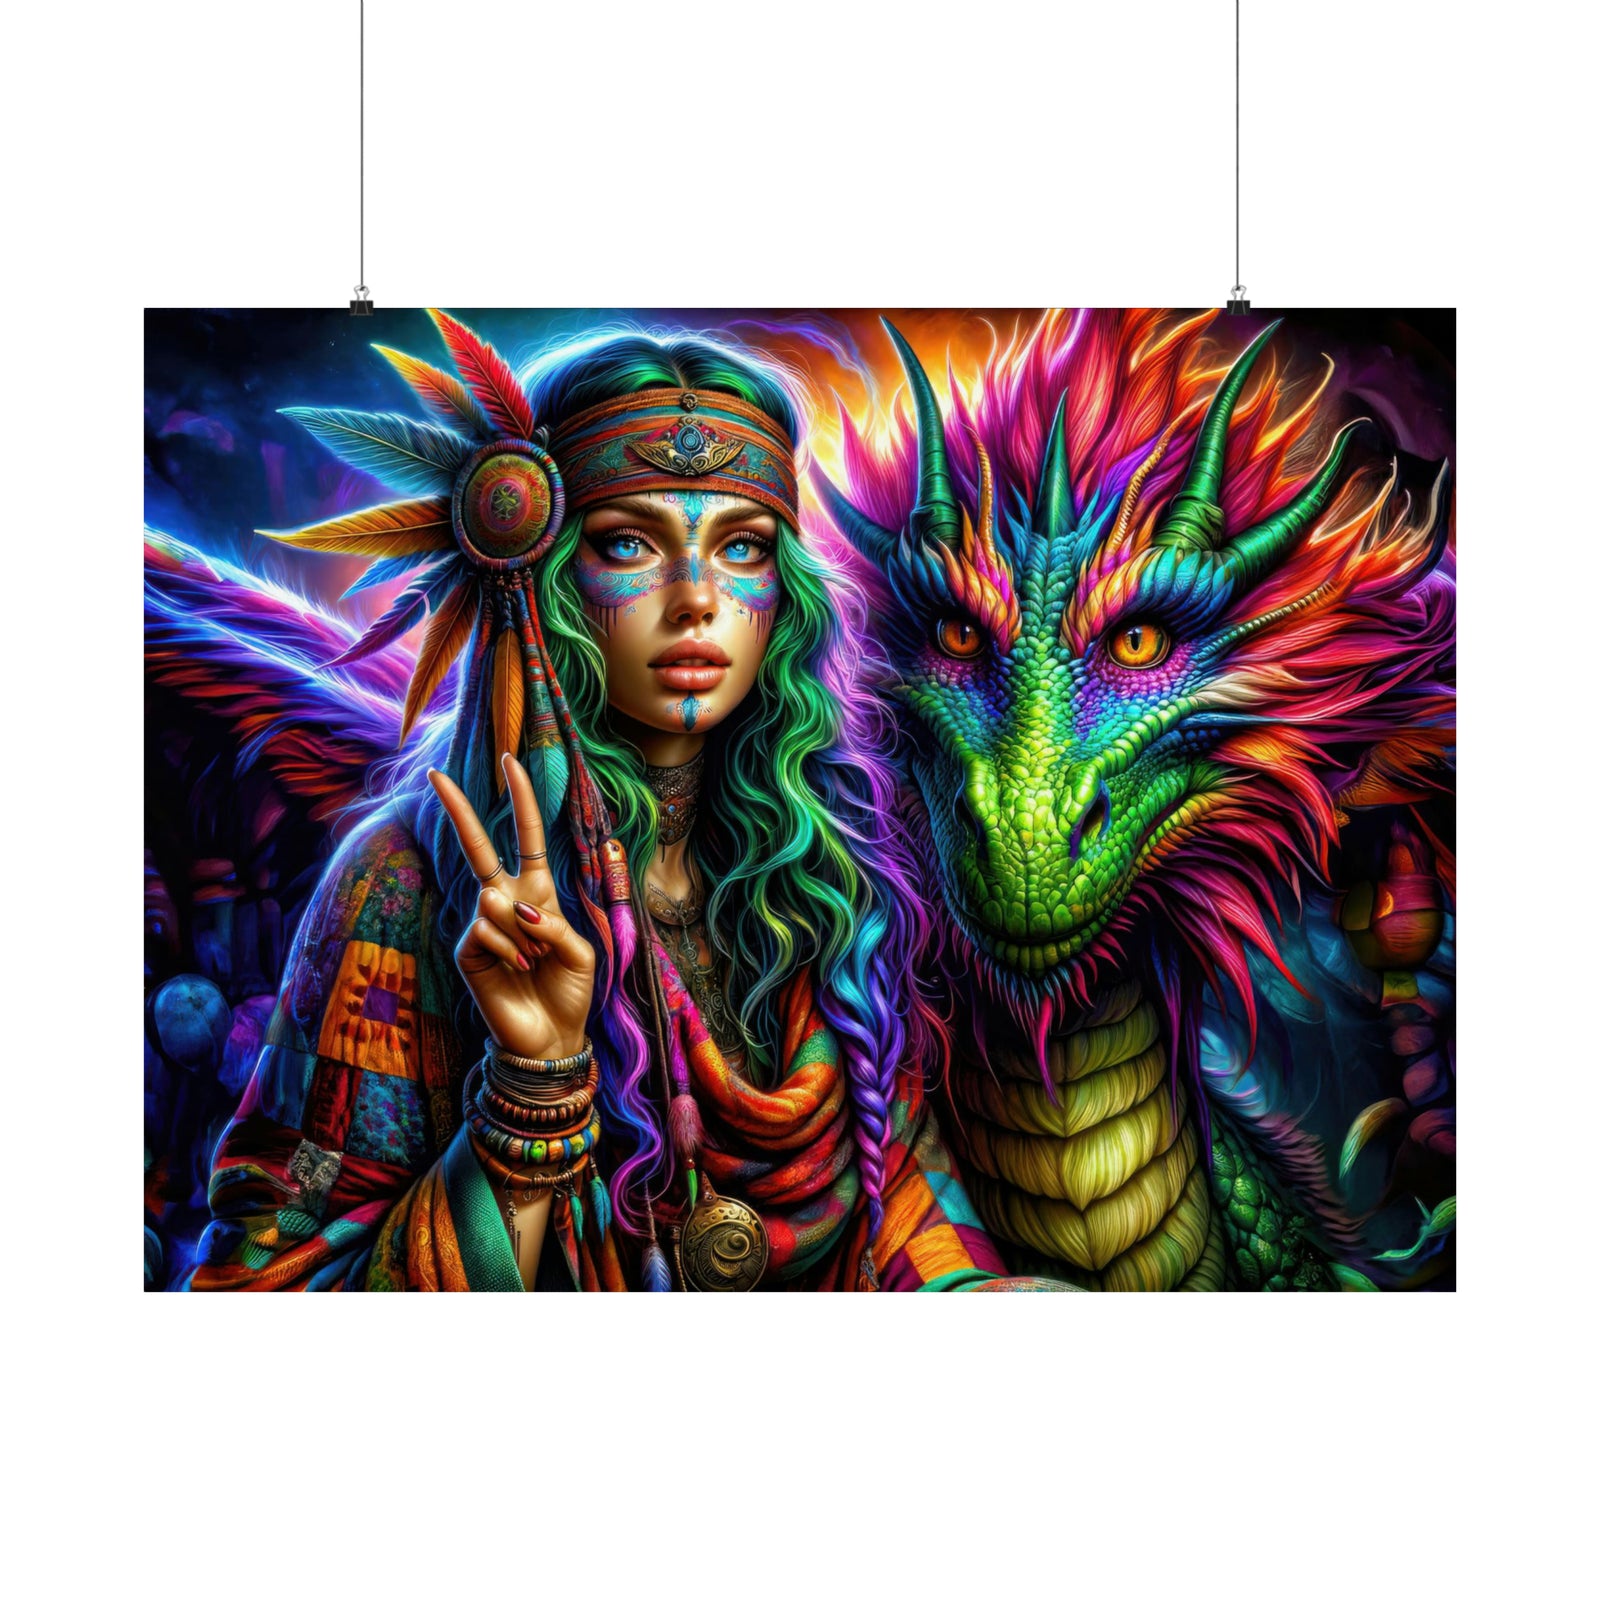 The Dragon's Bohemian Guardian Poster